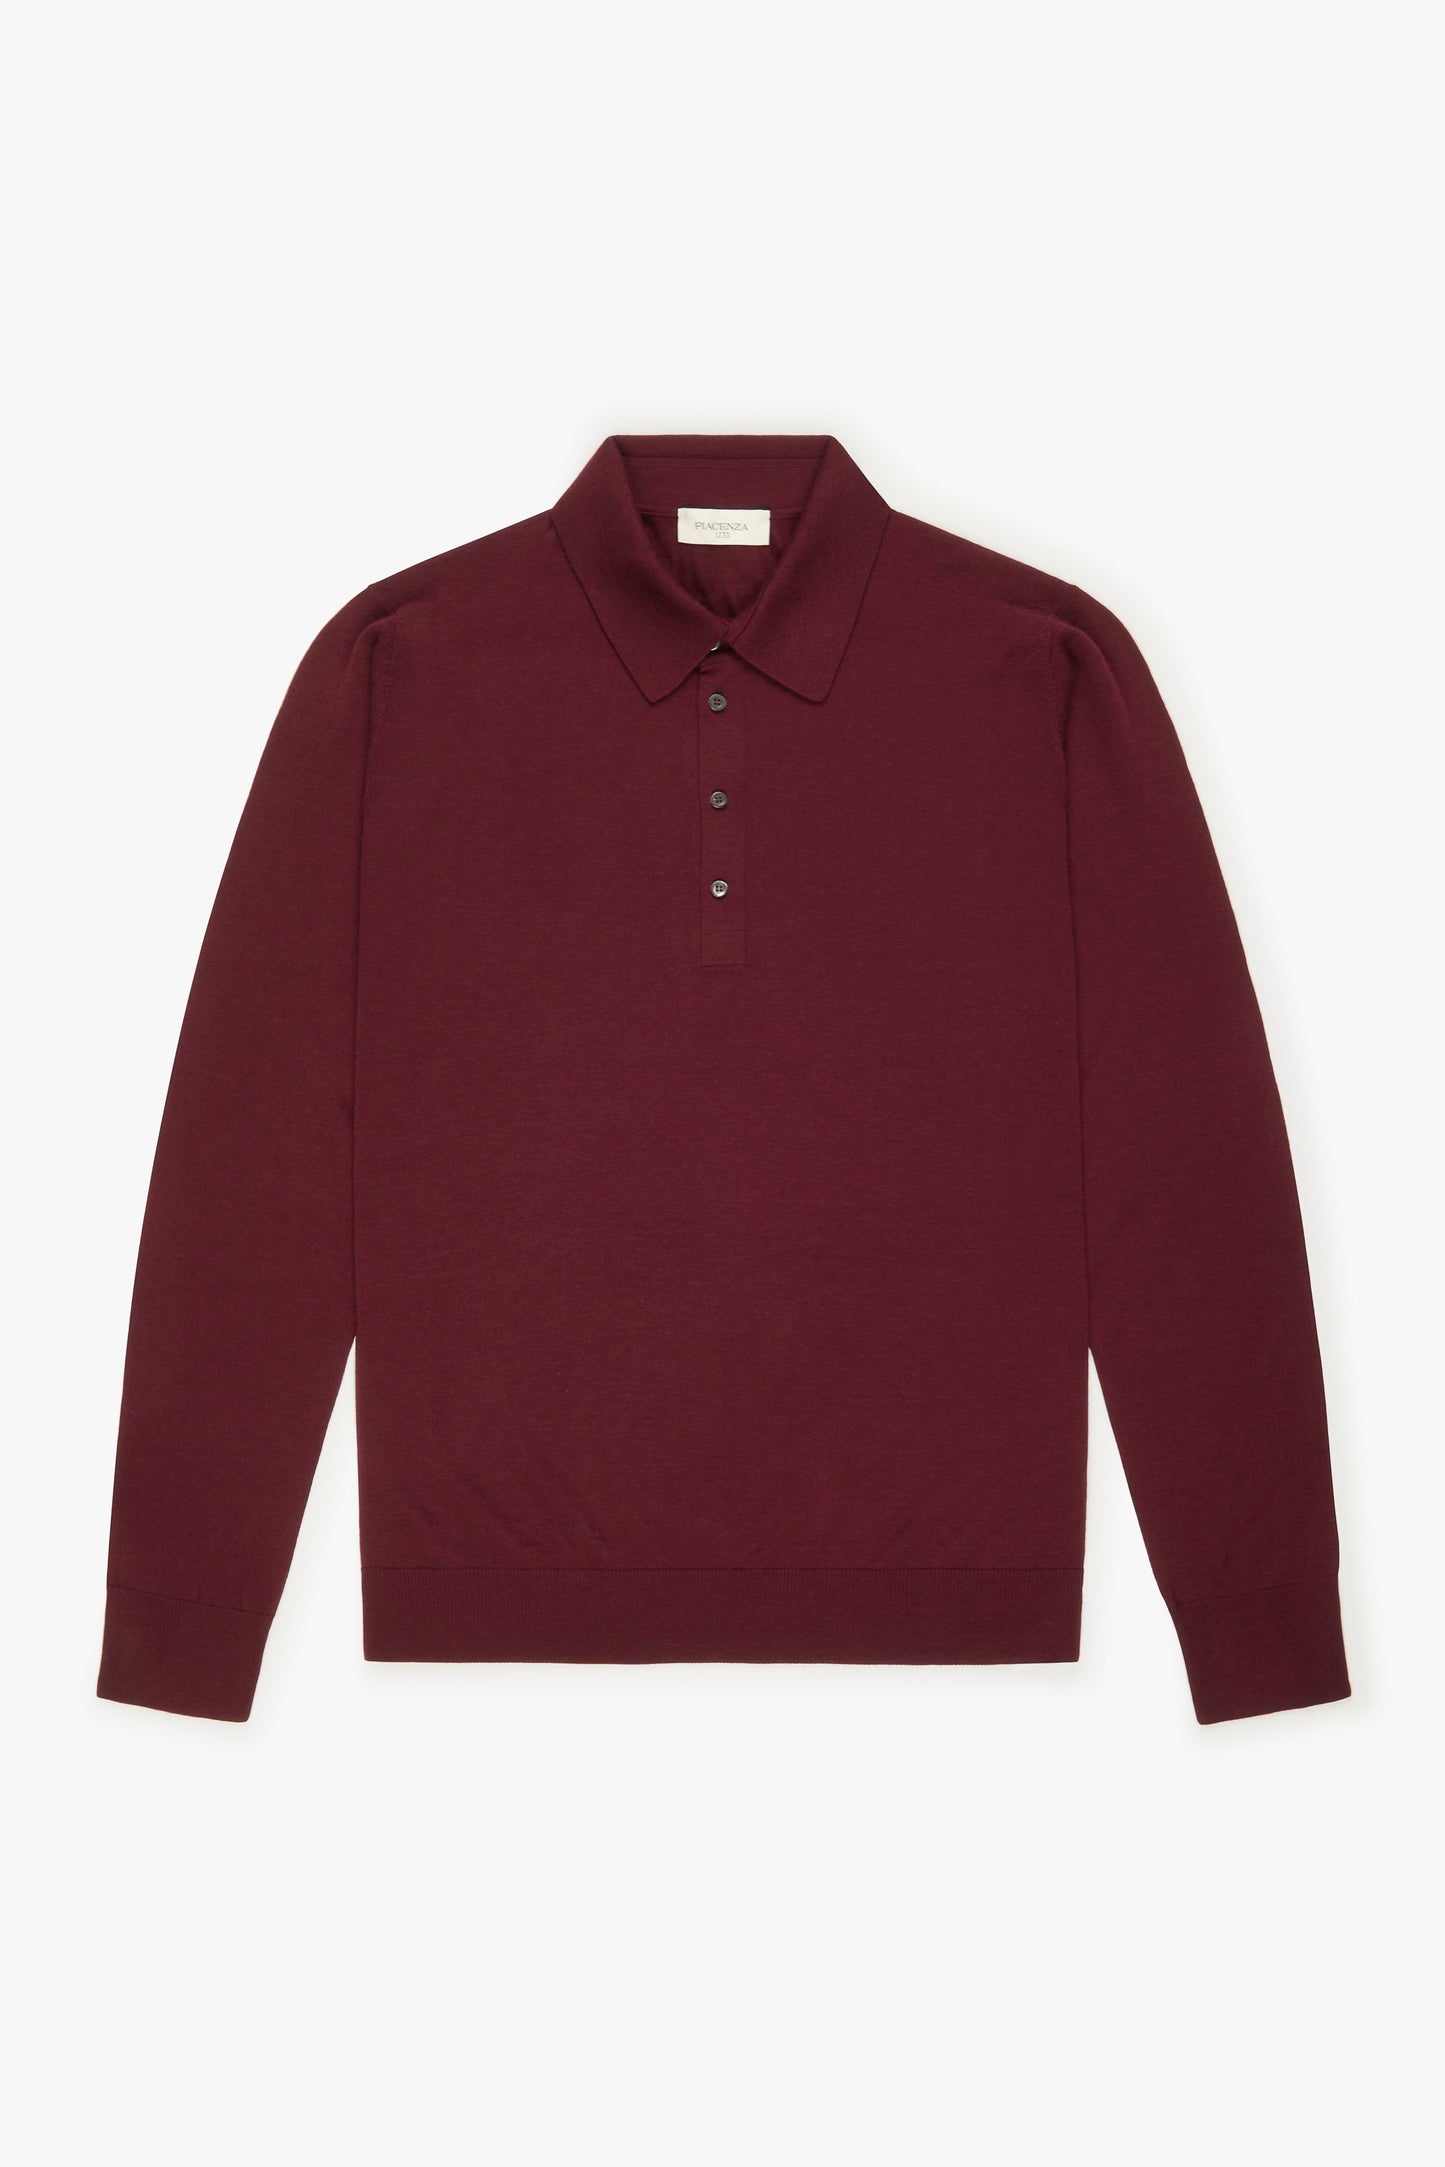 Burgundy super fine merino wool polo shirt